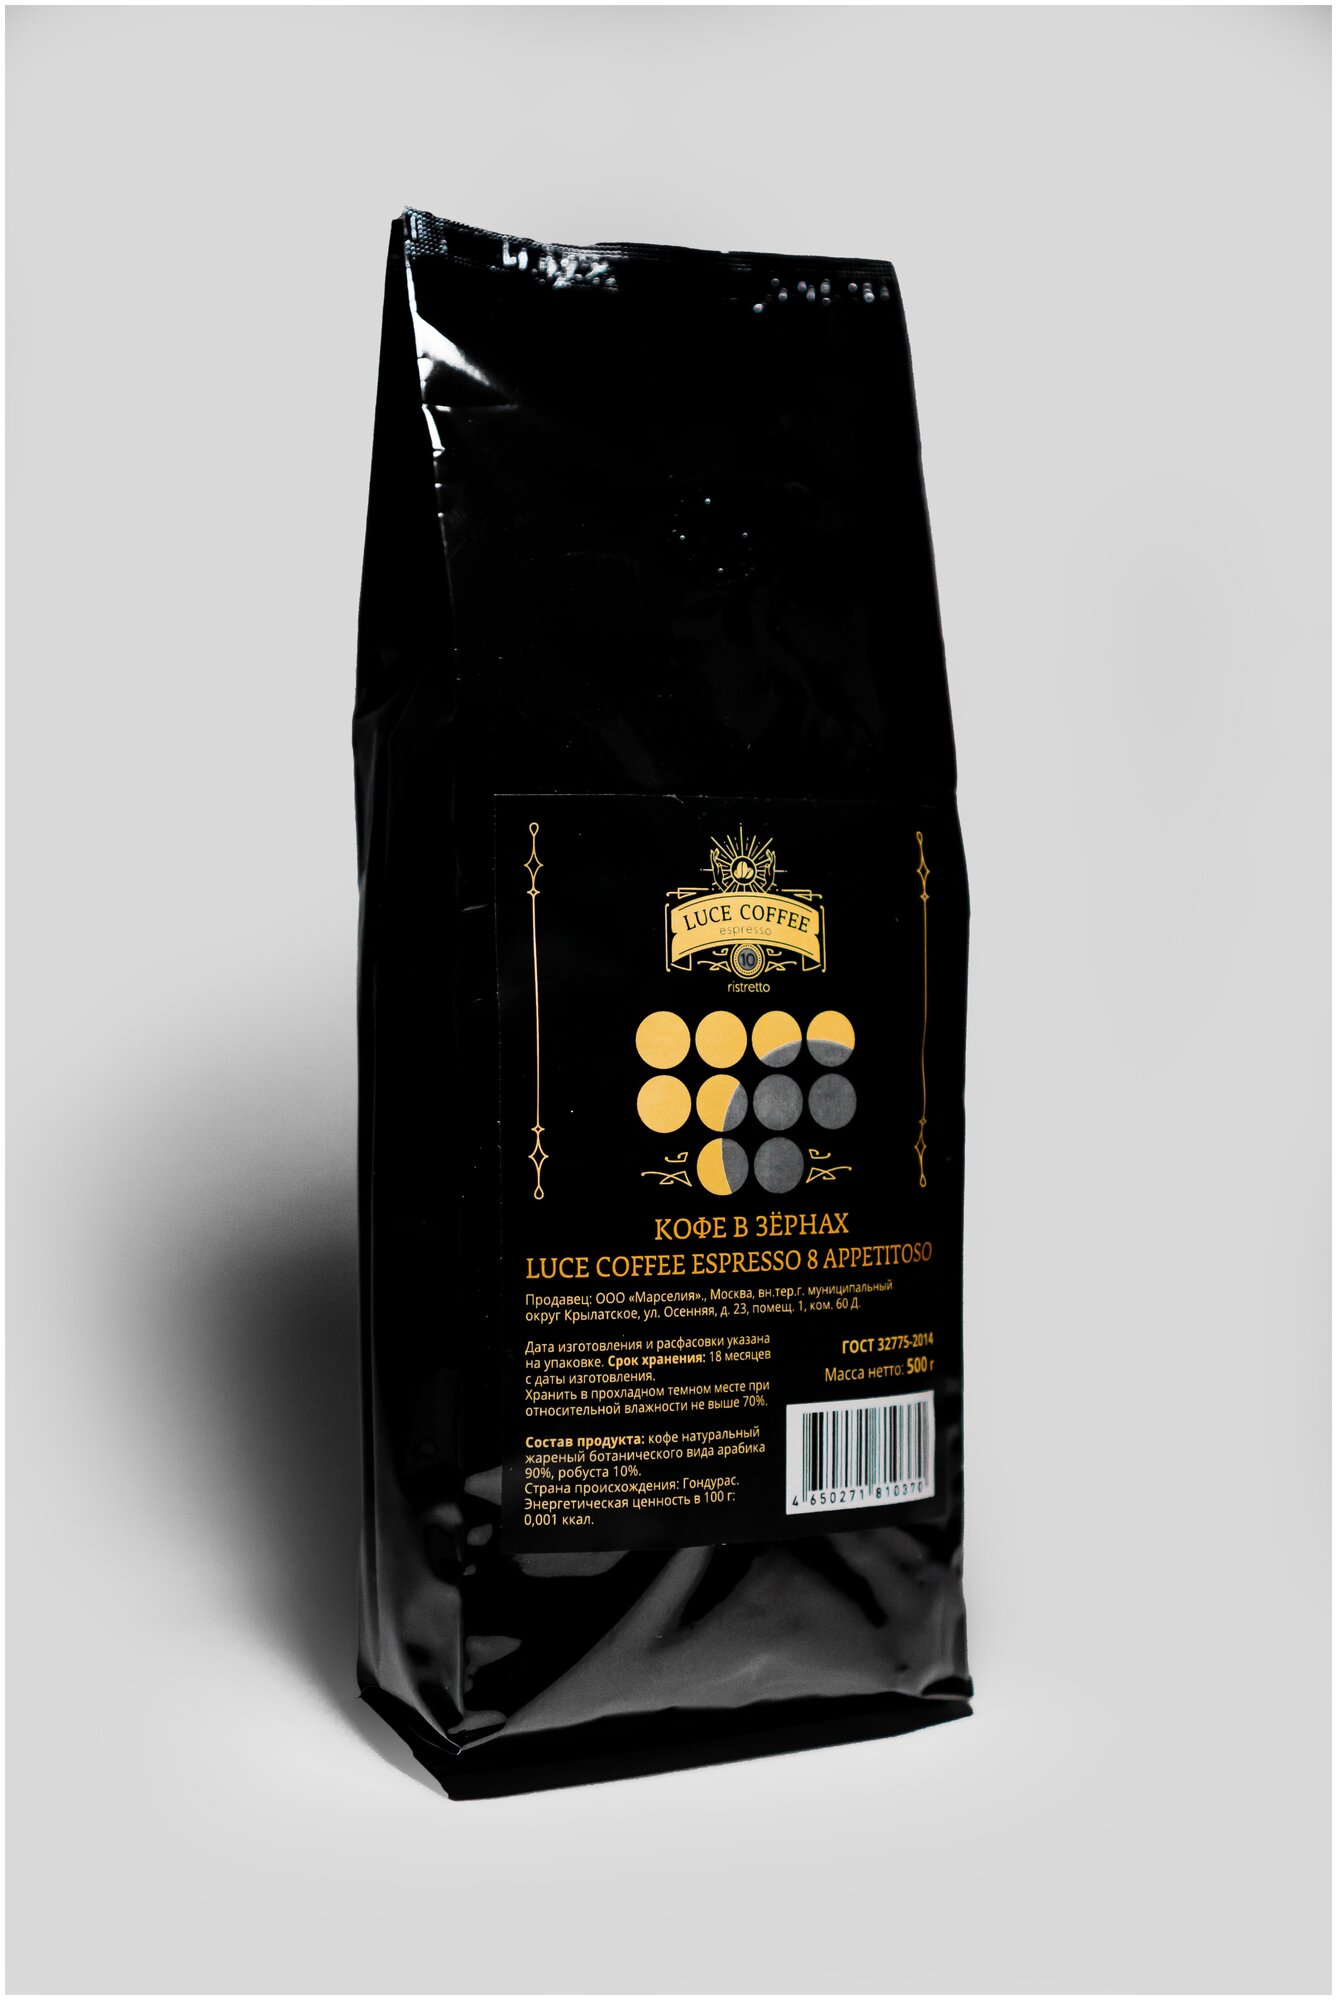 Кофе В зёрнах LUCE COFFEE ESPRESSO 10 RISTRETTO (арабика/робуста) - 500 грамм